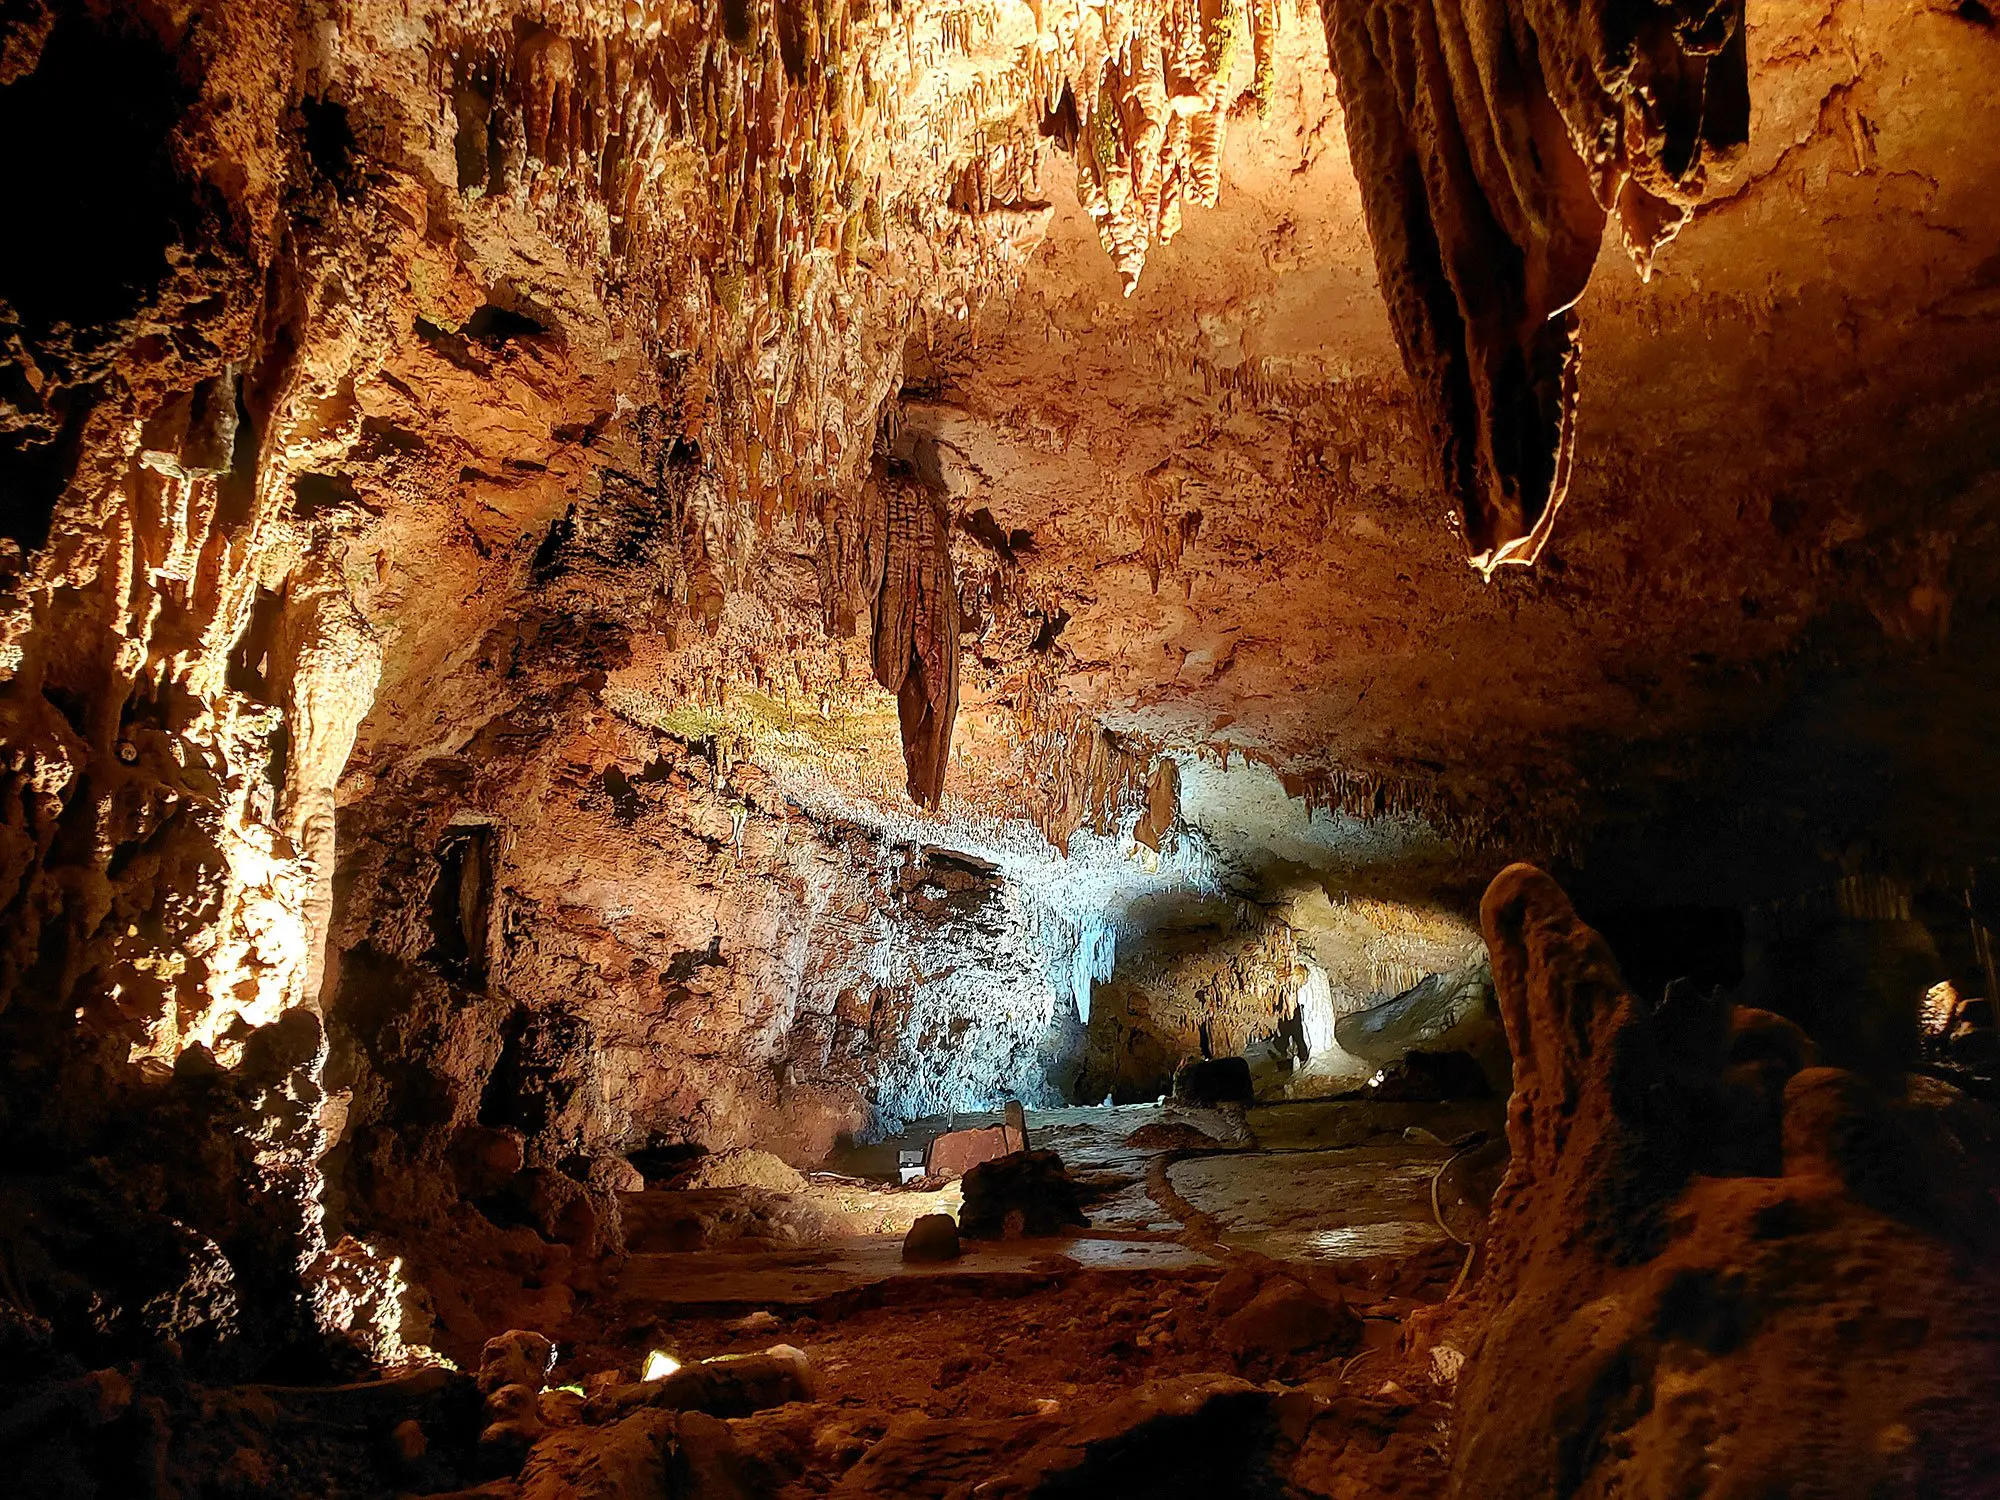 Beautiful shot of well lit stalactites and stalagmites of the Meramec Caverns